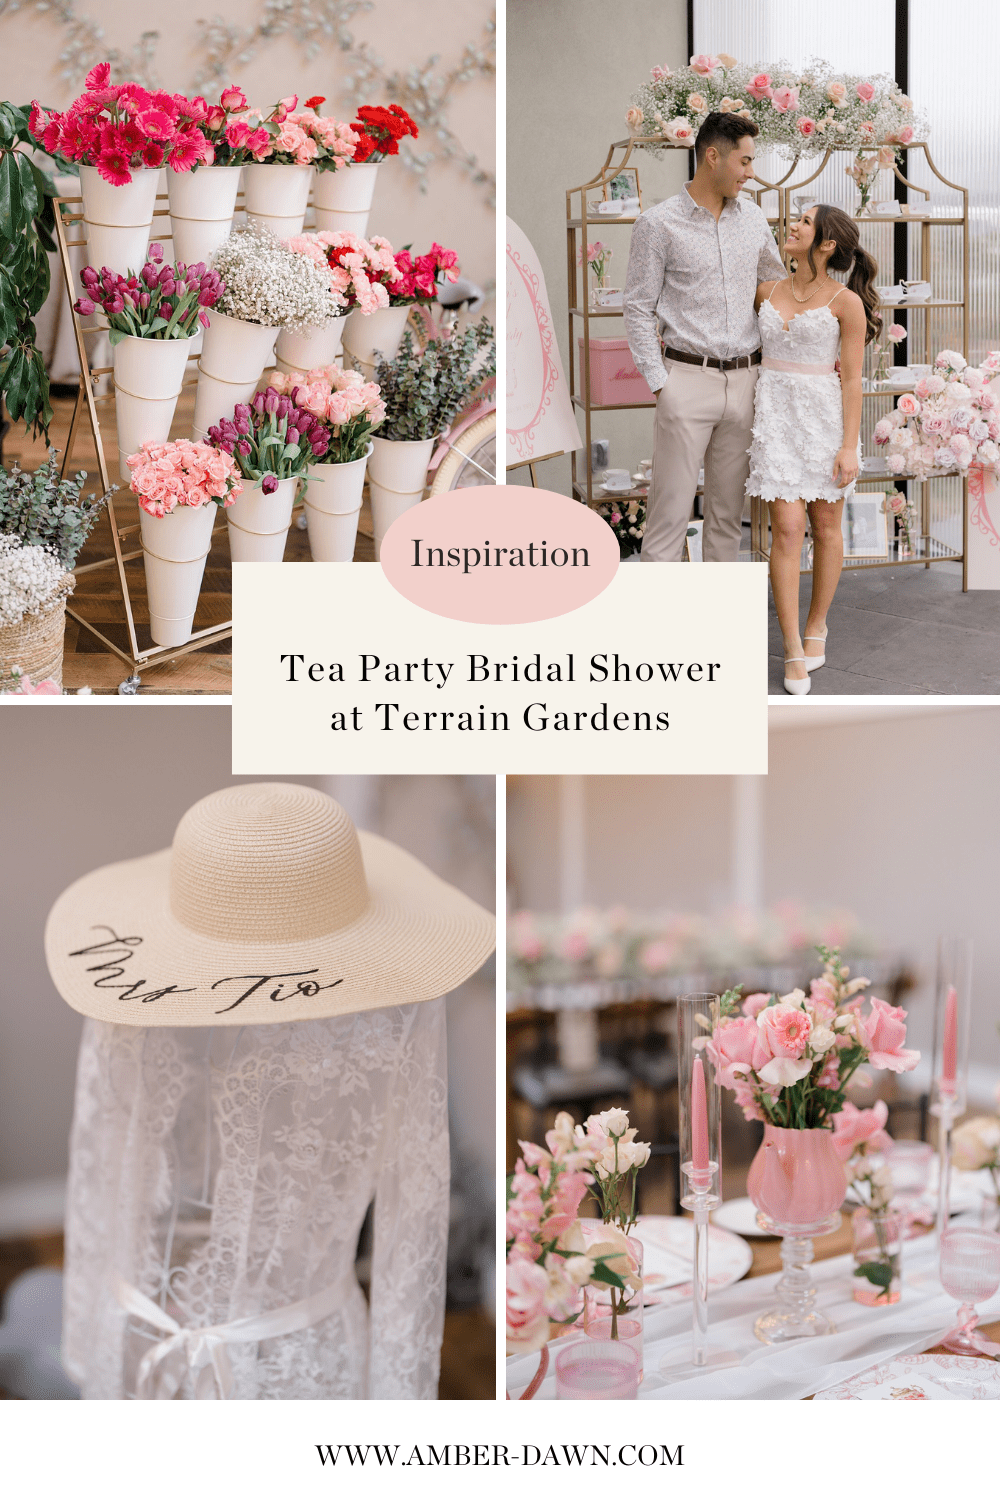 Spring Tea Party Bridal Shower details at Terrain Gardens